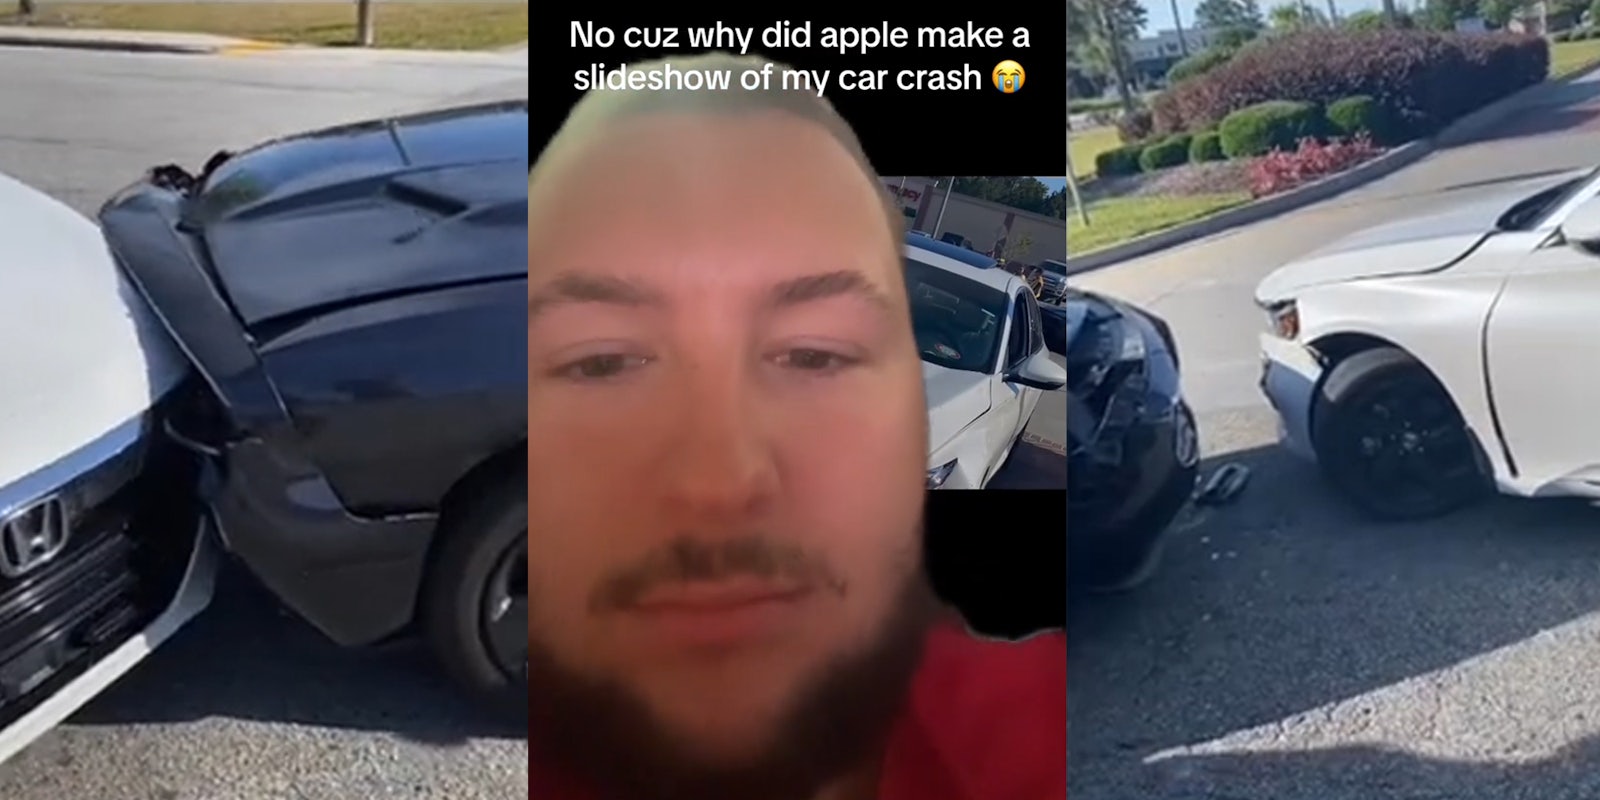 car crash photo (l) man greenscreen TikTok over Apple slideshow of car crash with caption 'No cuz why did apple make a slideshow of my car crash' (c) car crash photo (r)